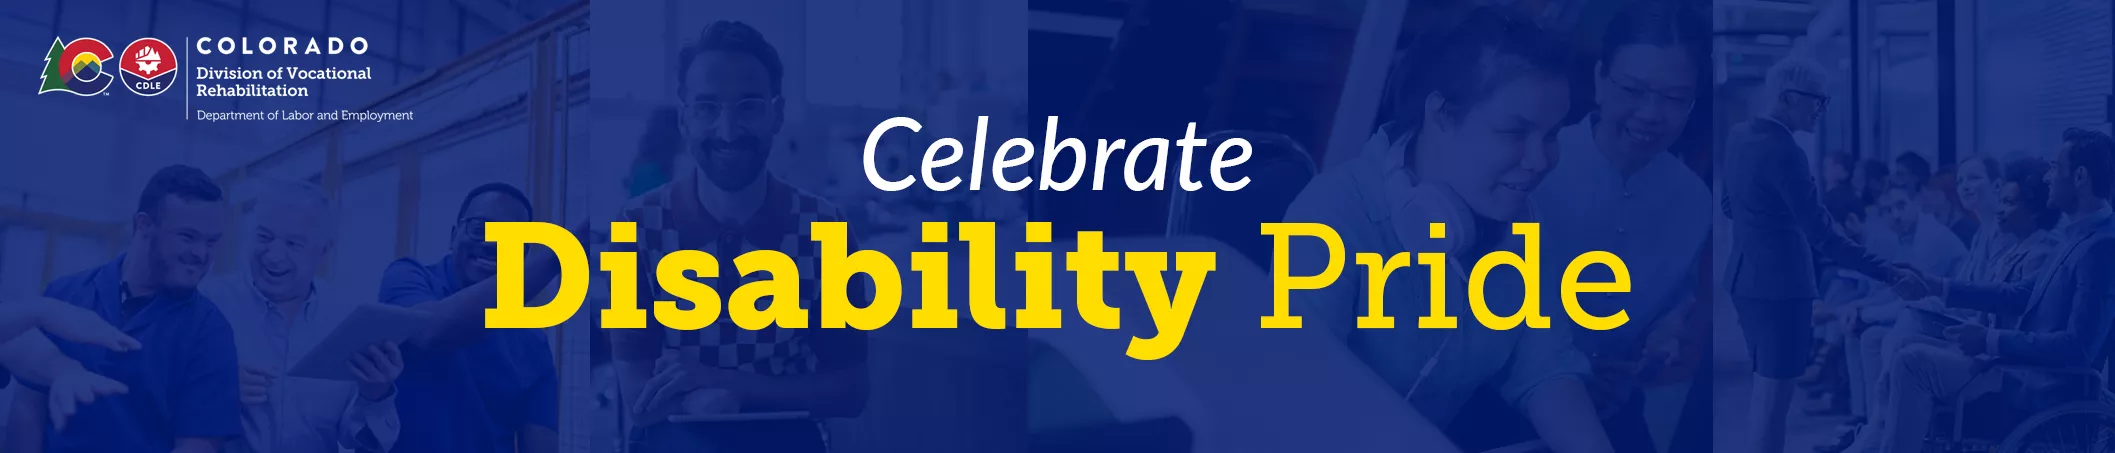 CDLE/DVR Celebrate disability pride